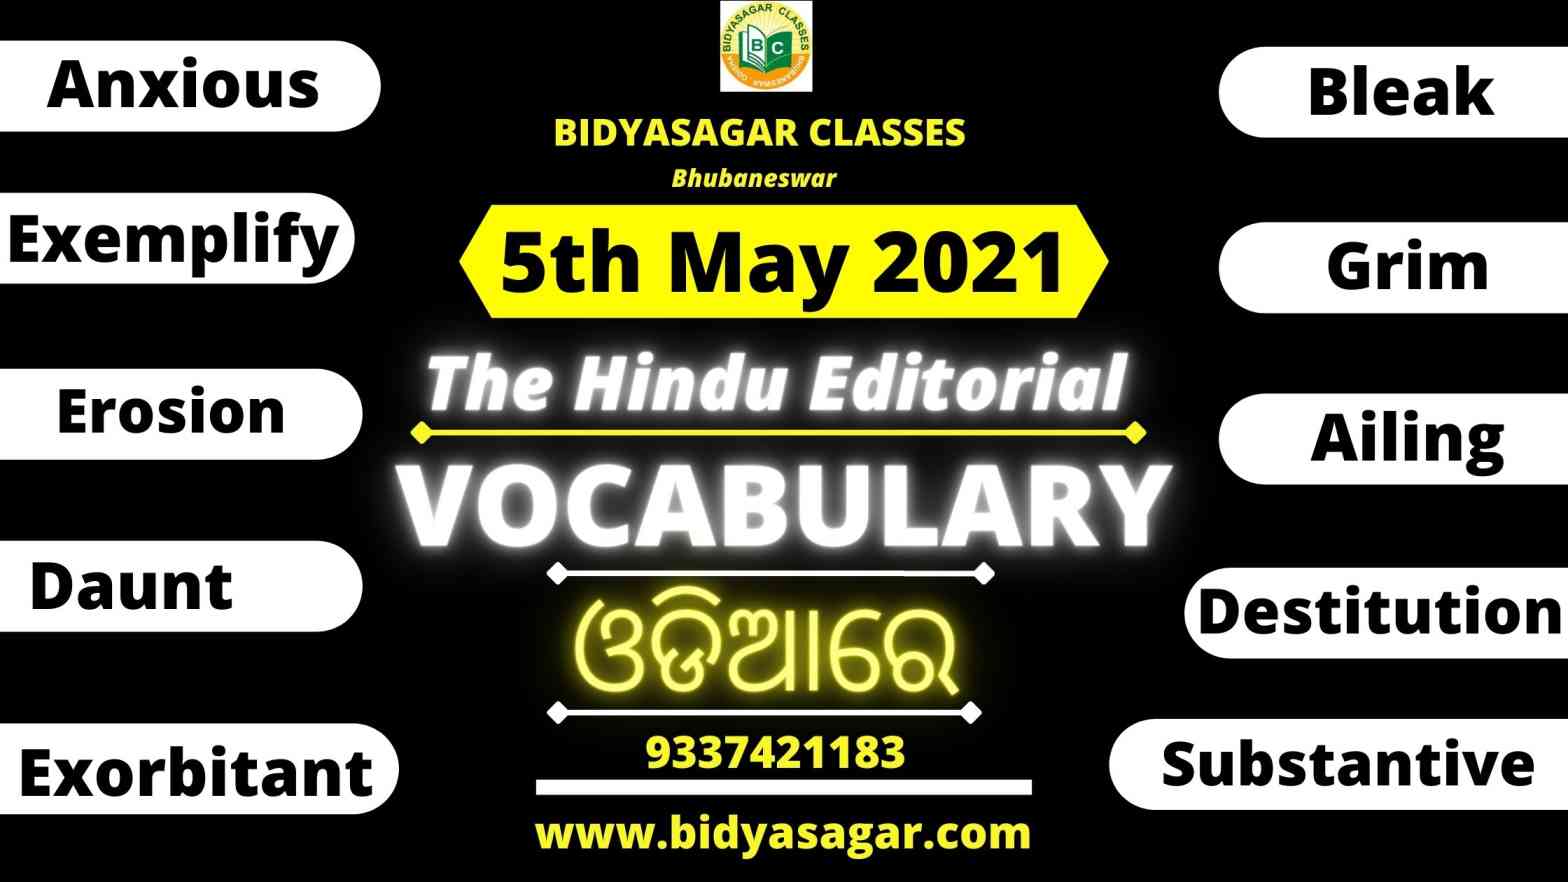 The Hindu Editorial Vocabulary of 5th May 2021